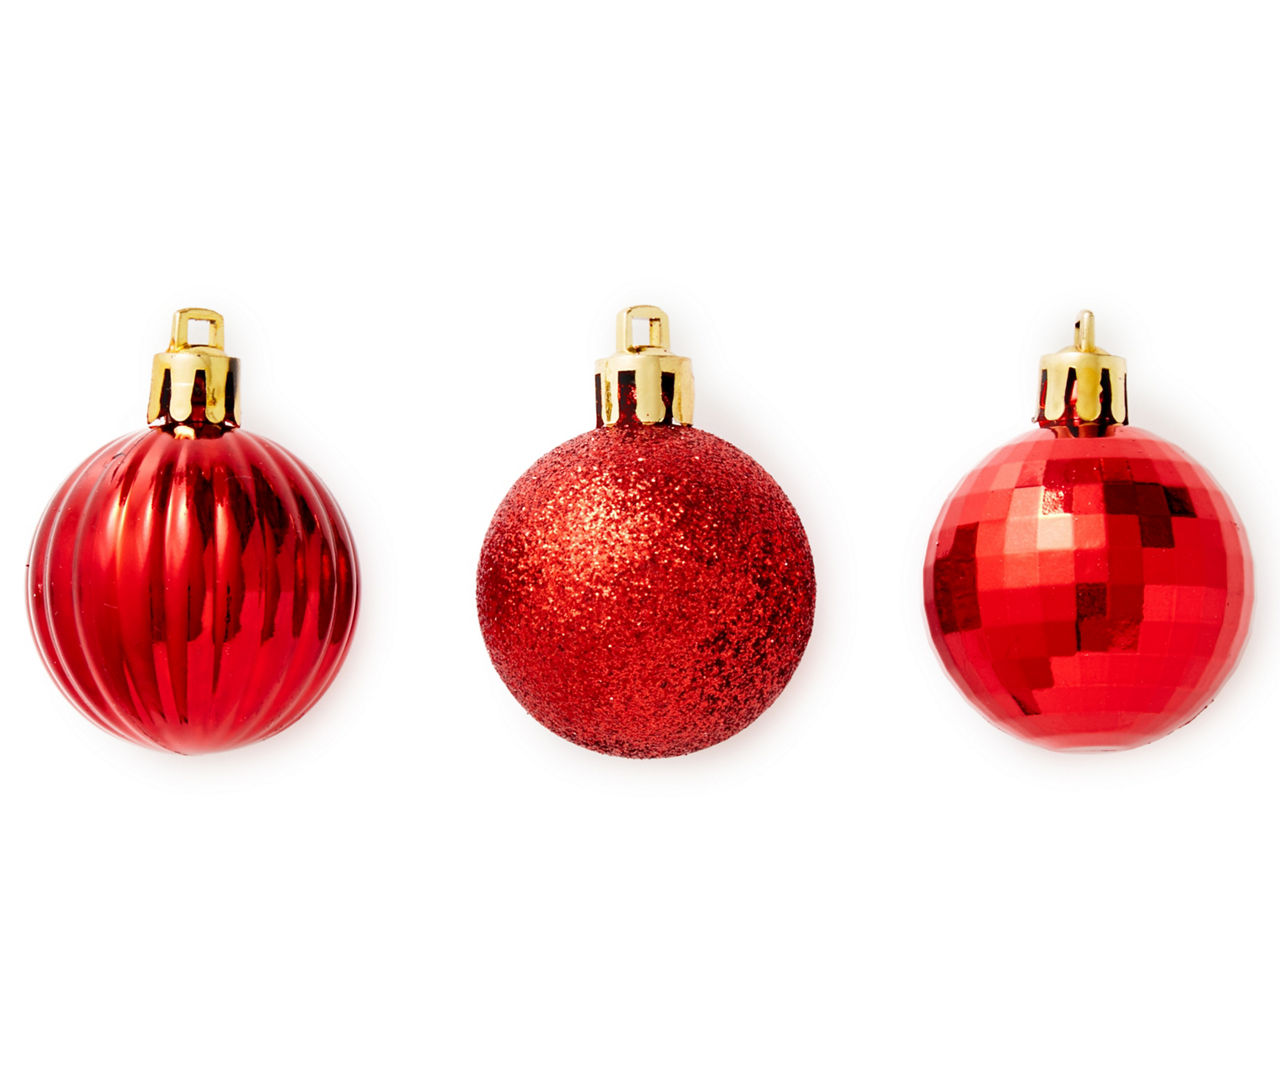 Classic Mini Ornaments, Set of 32